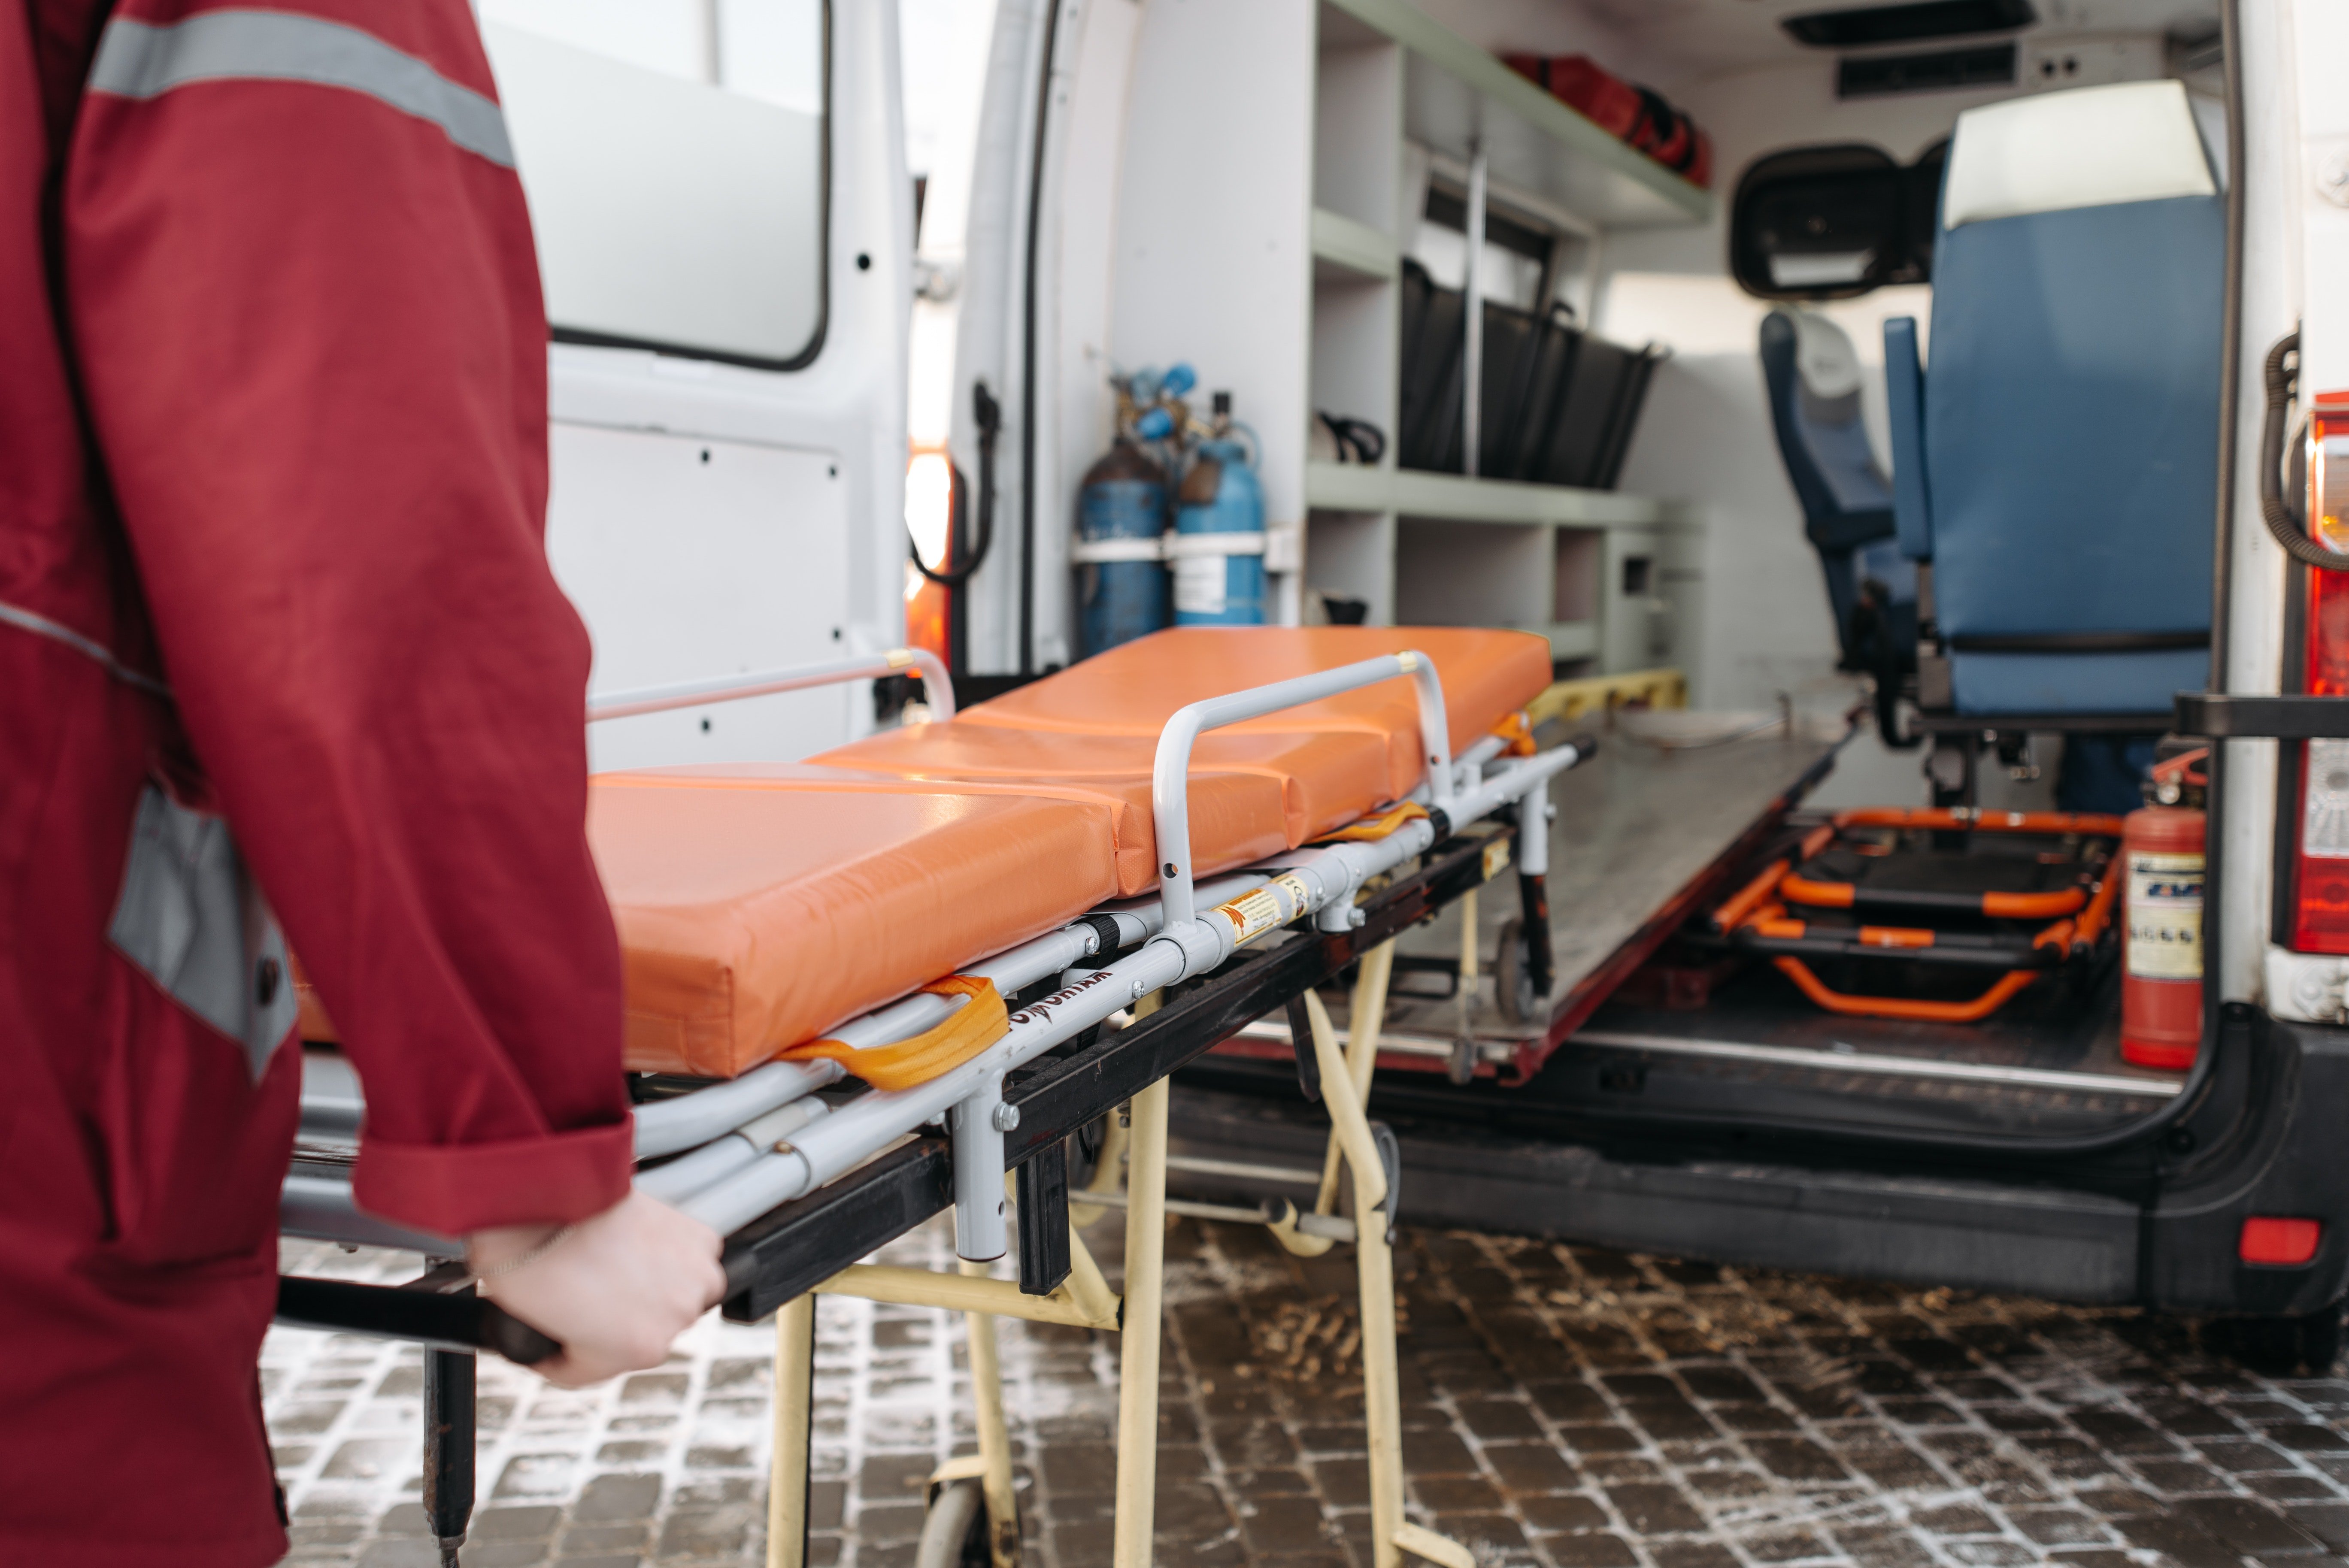 Paramedic pushing a stretcher. | Source: Pexels/Pavel Danilyuk